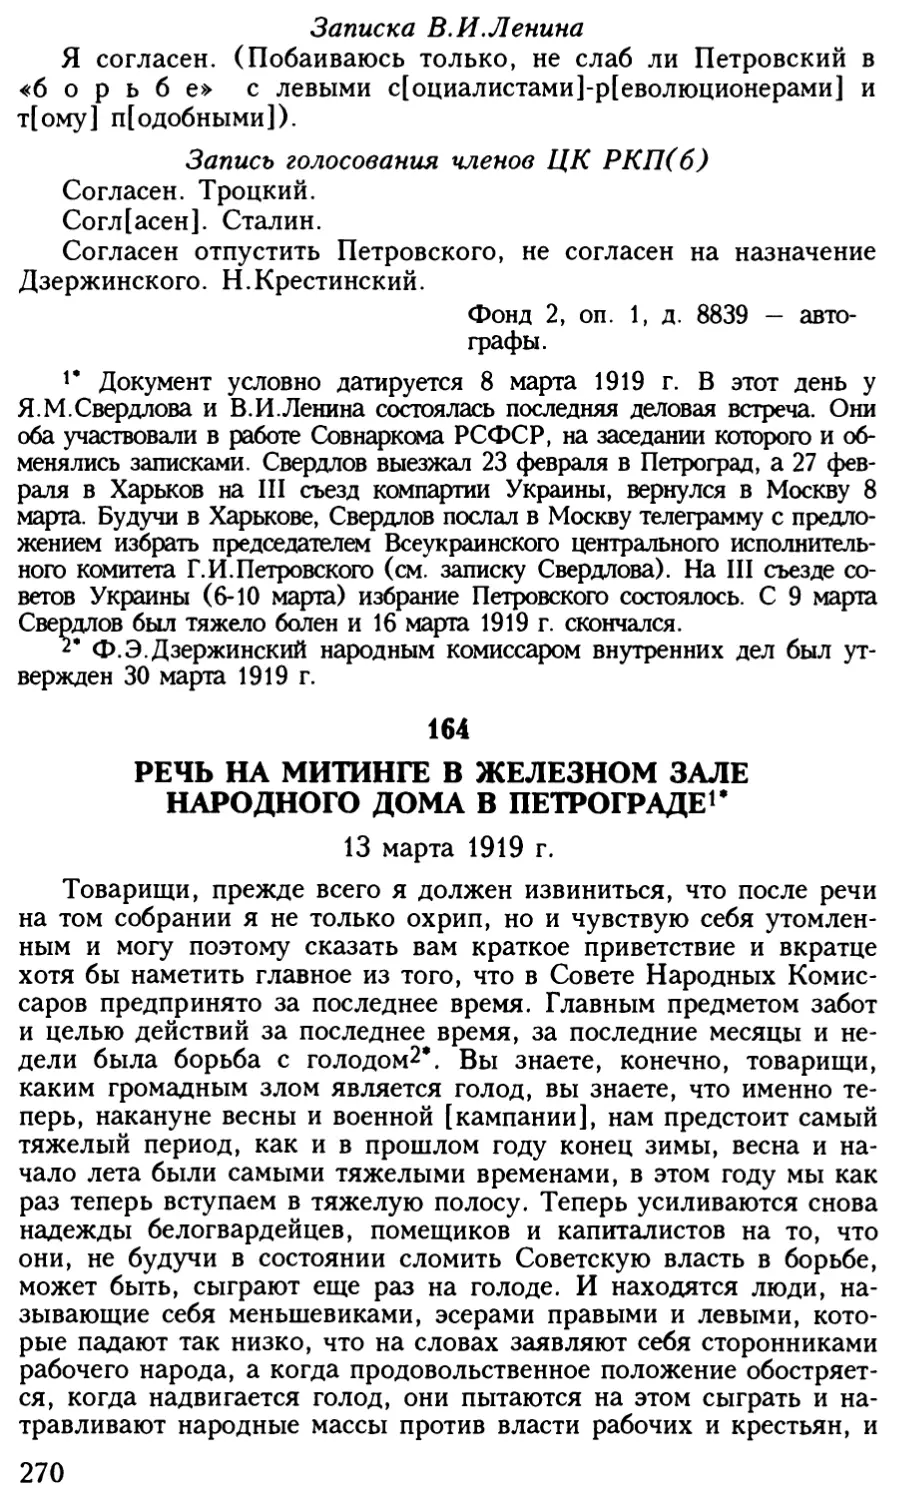 164. Речь на митинге в Железном зале Народного дома в Петрограде. 13 марта 1919 г